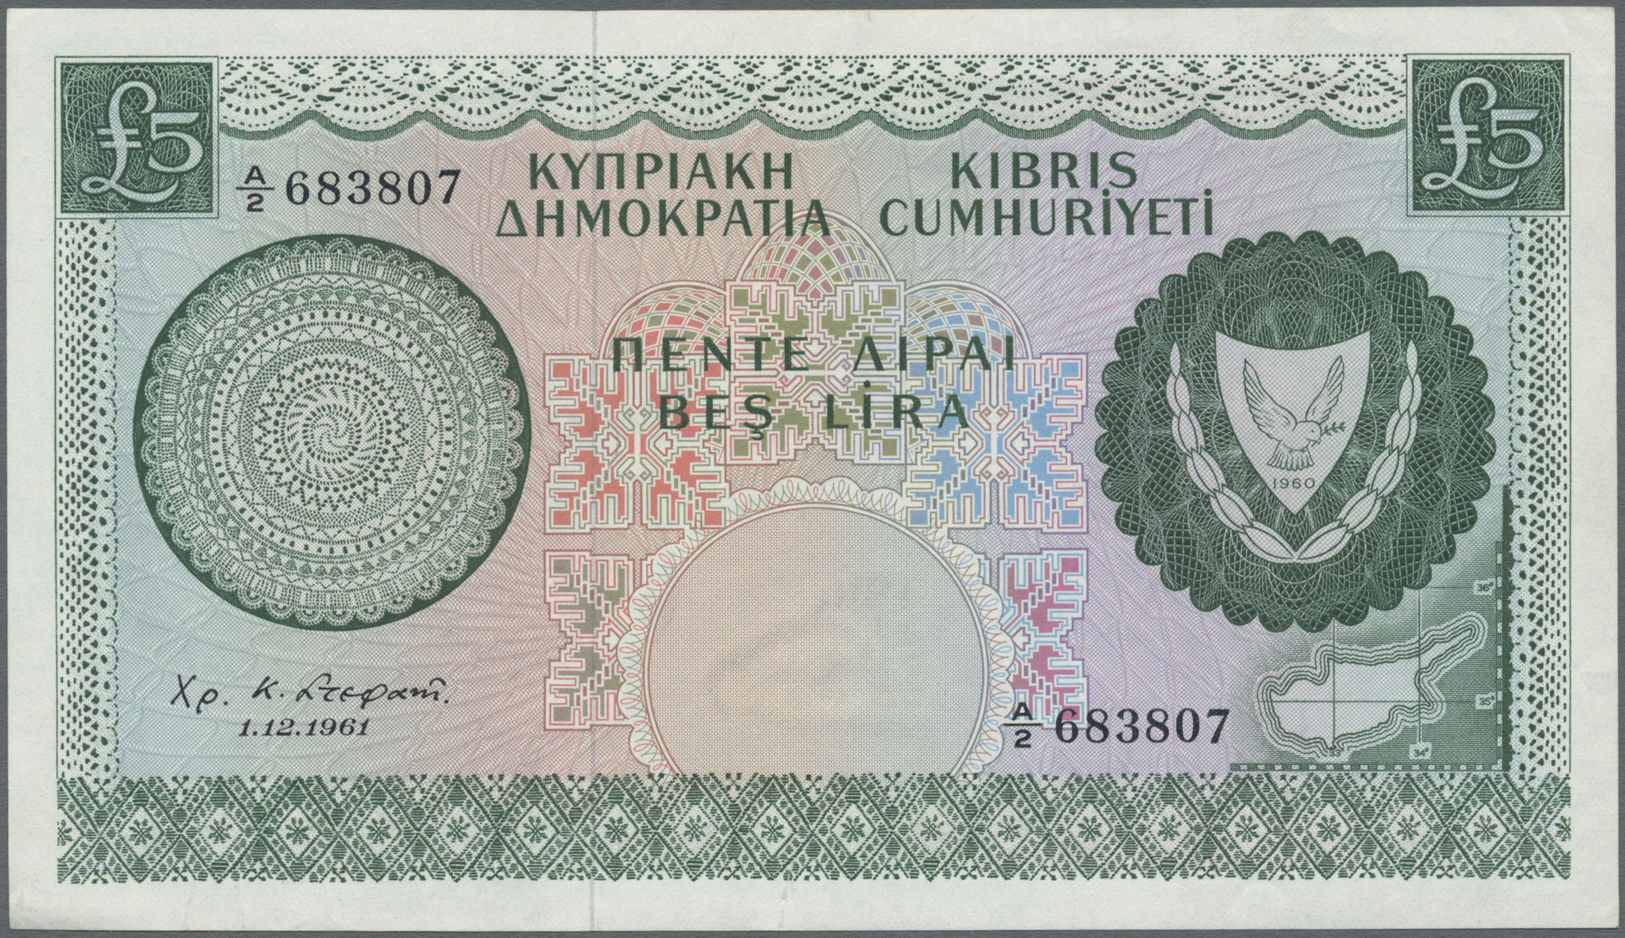 00619 Cyprus / Zypern: 5 Pounds 1961 P. 40, Light Center Bend, Light Dints At Borders, Crisp Paper And Original Colors, - Cyprus